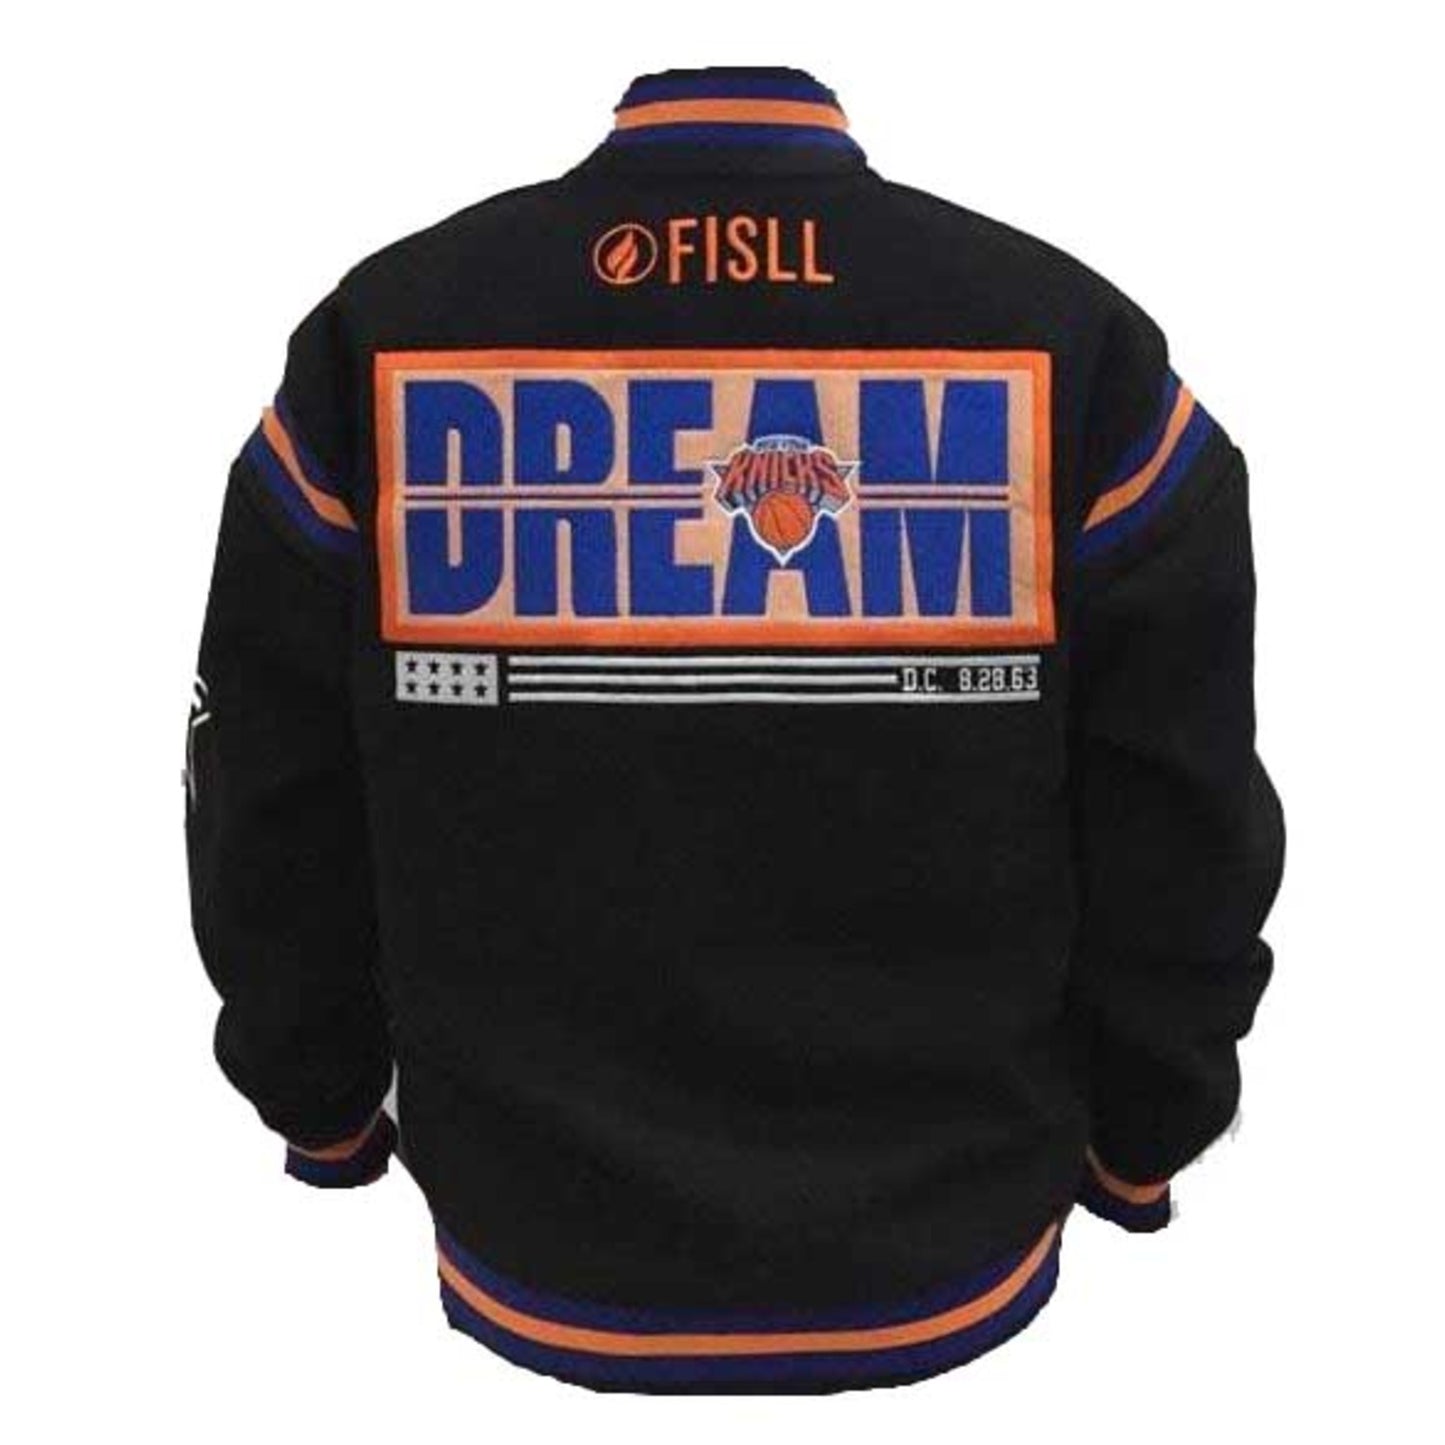 FISLL Knicks Black History Collection Varsity Jacket - Back View